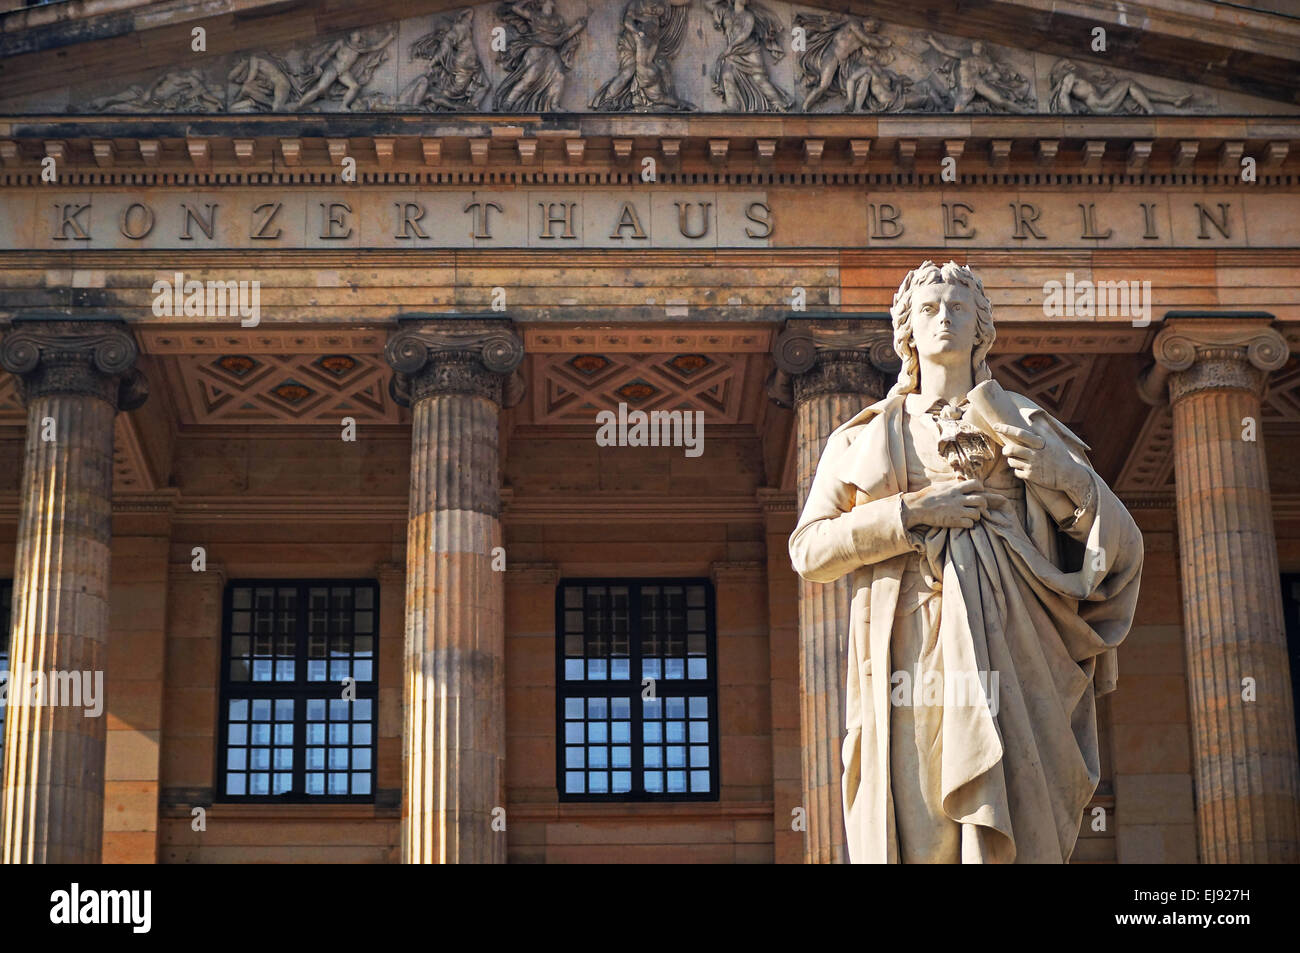 Konzerthaus Berlin Deutschland Foto de stock